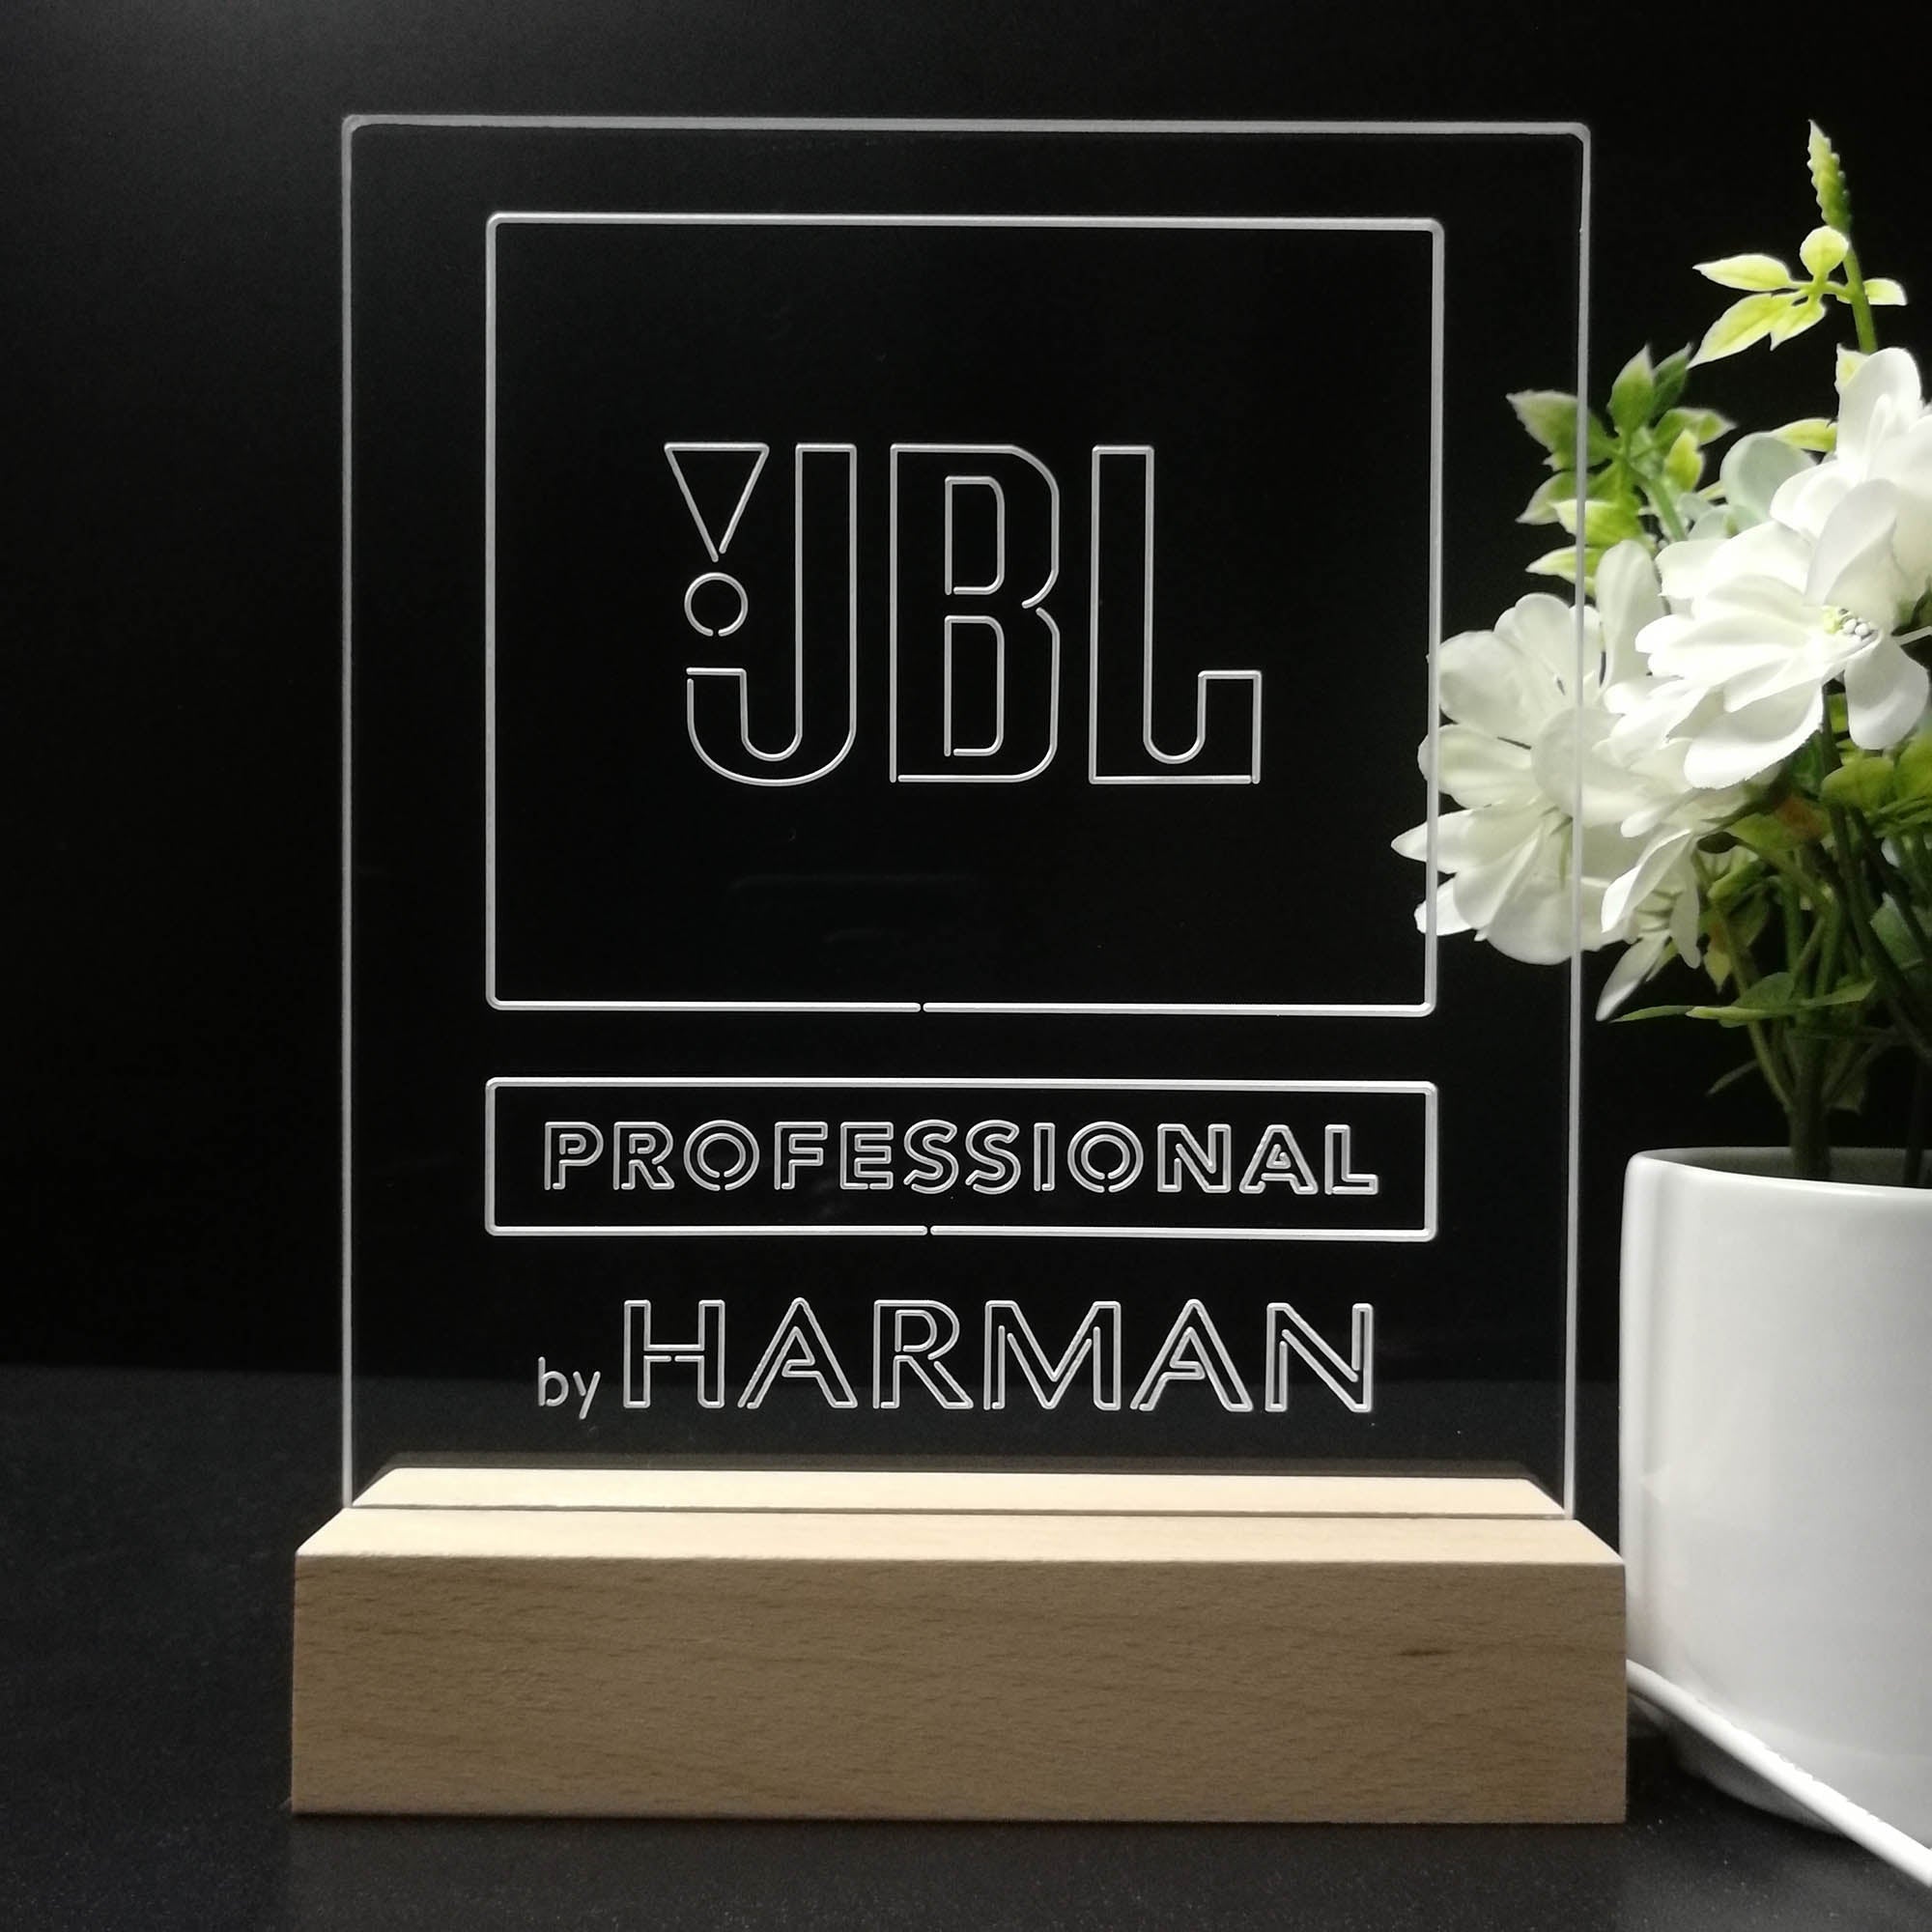 JBL Professional Harman Audio Home Theater Cinema 3D Illusion Night Light Desk Lamp